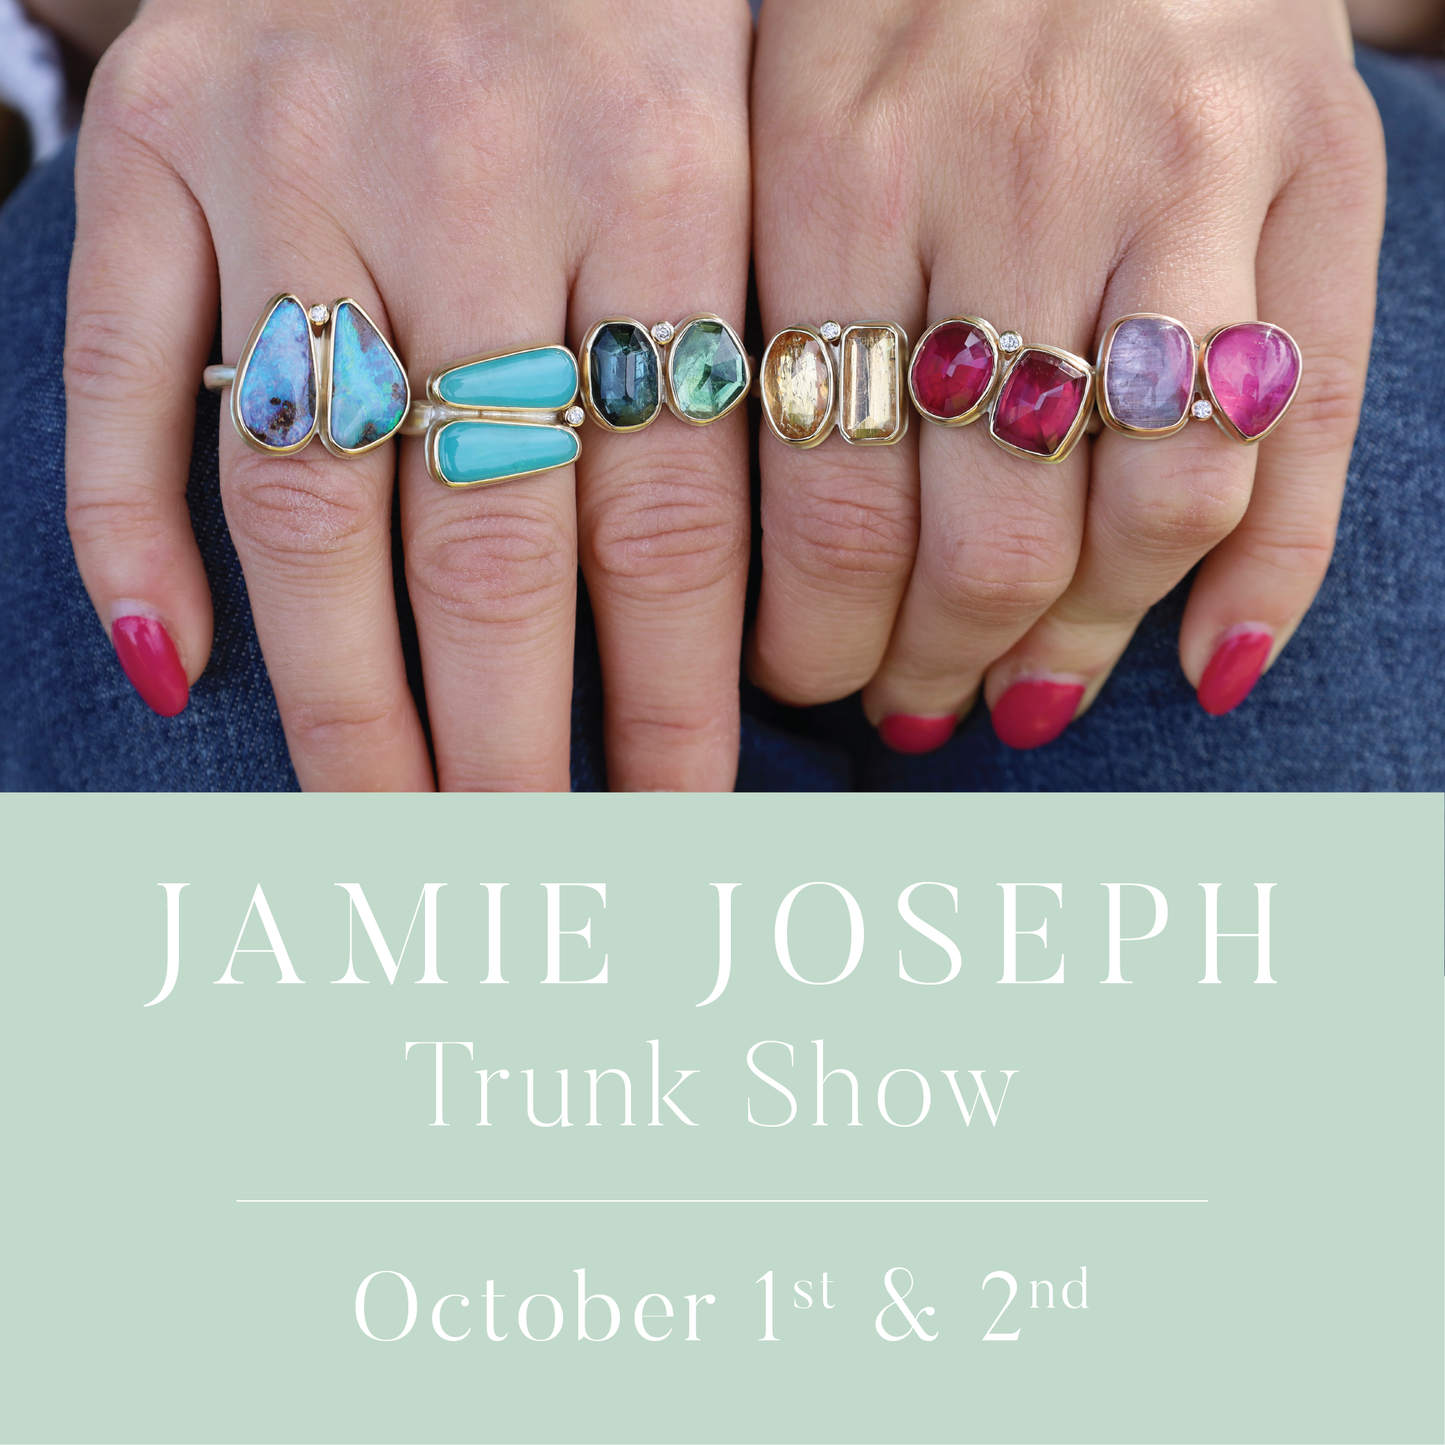 Jamie Joseph Trunk Show in Saucon Valley 10/1 & 10/2